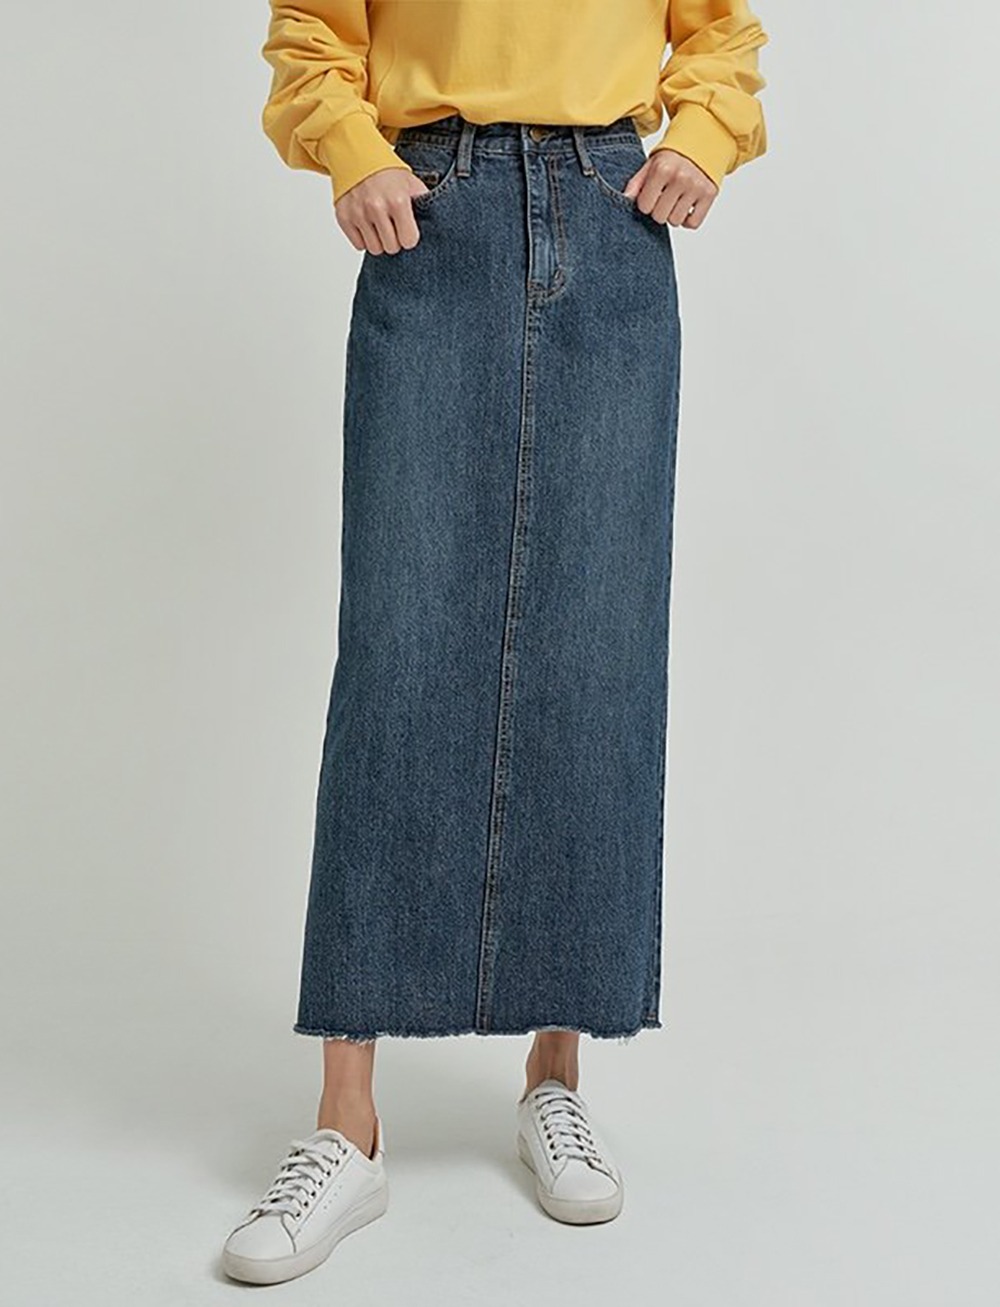 Hailey Vintage Denim Skirt